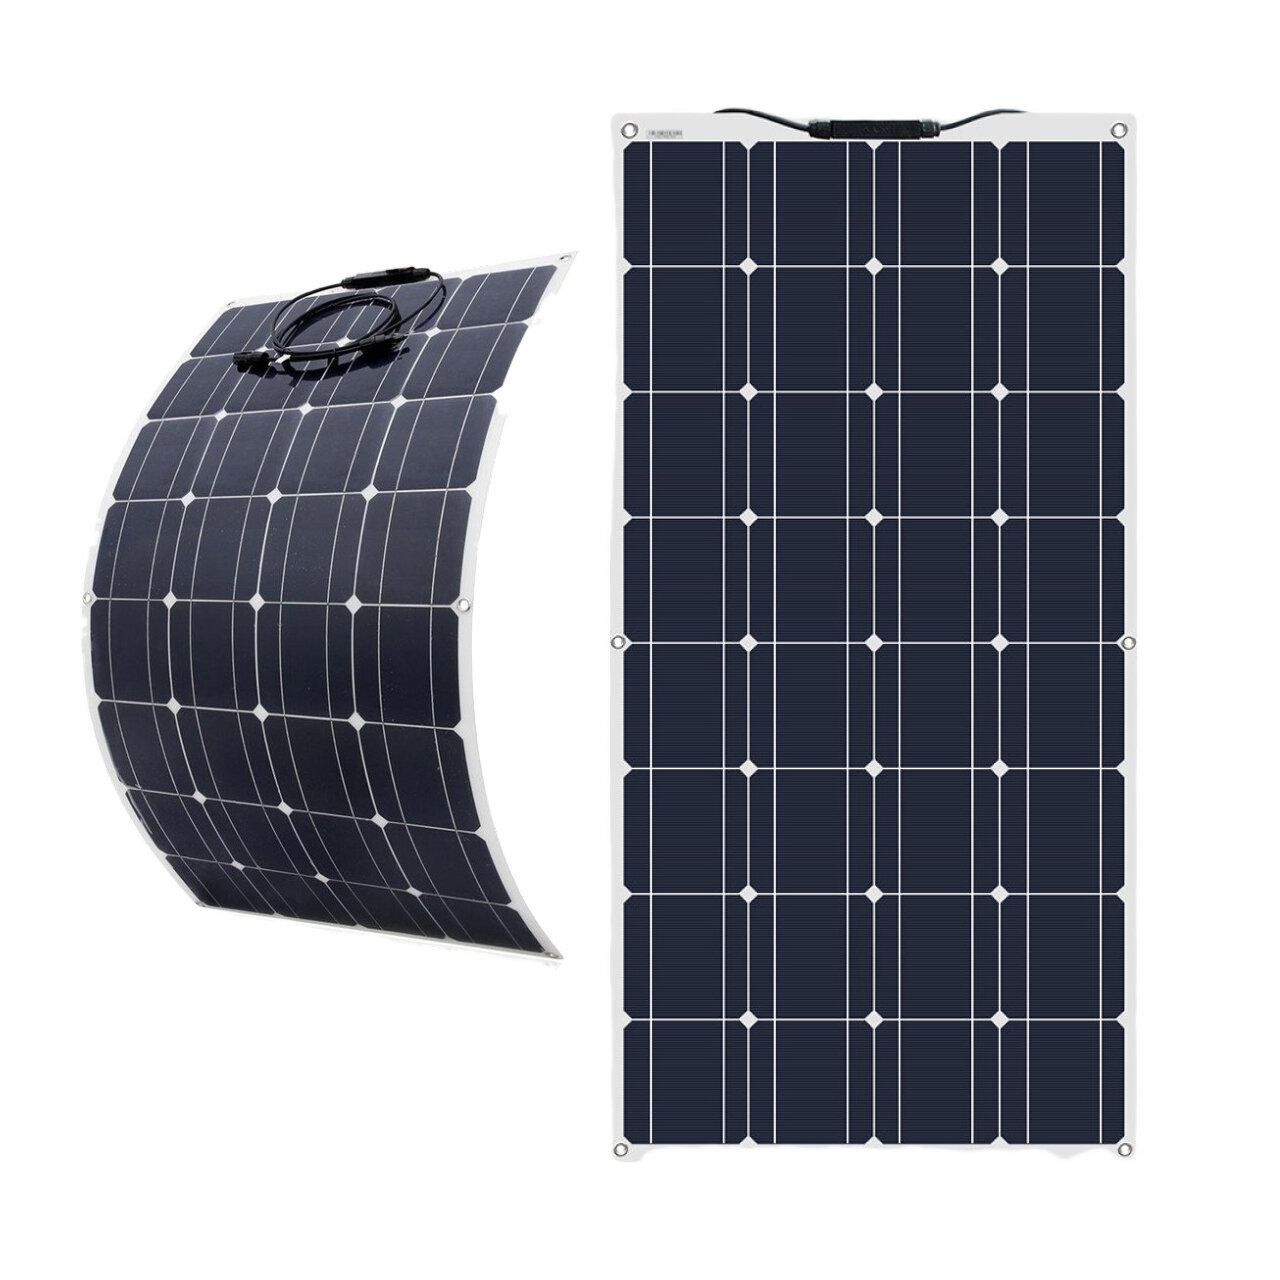 100W Solarpanel Flexibel Tragbar Batterie Ladegerät Monokristalline Solarzelle Outdoor Camping Travel